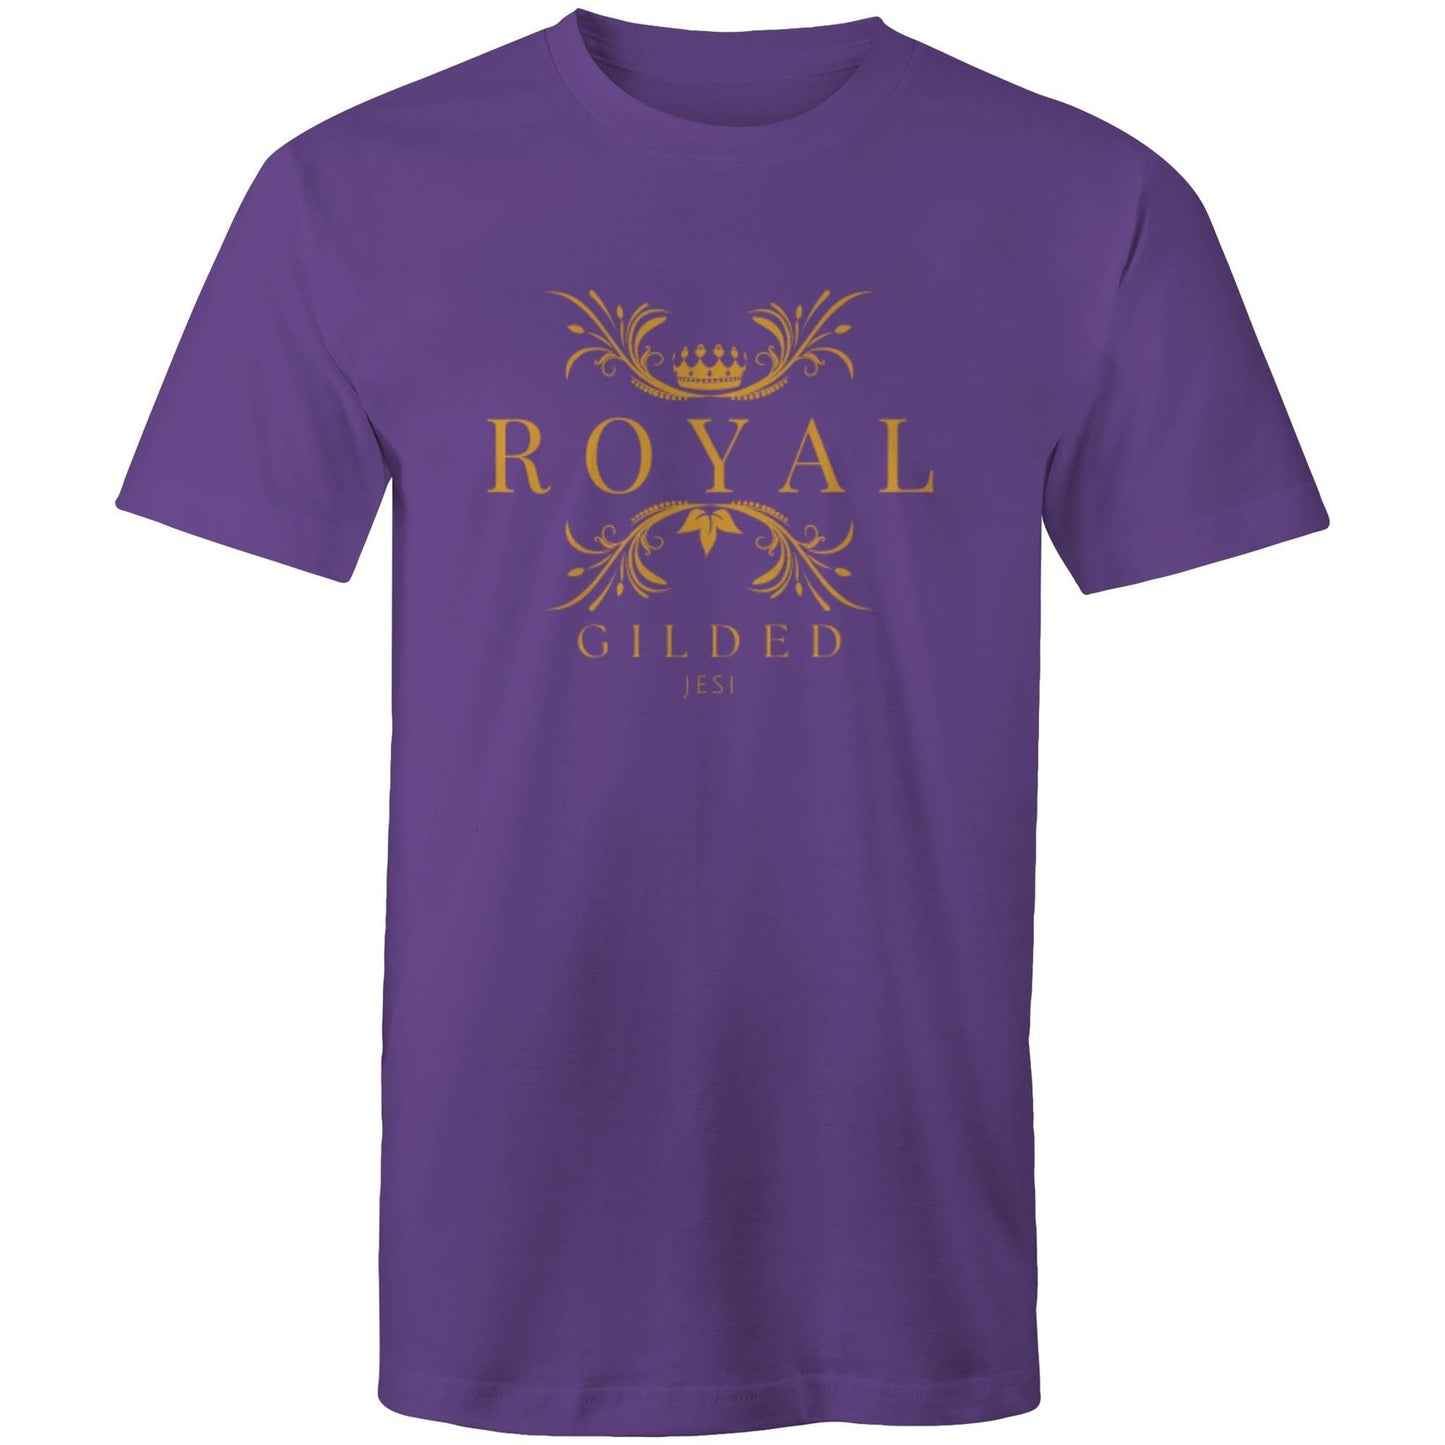 Royal Unisex Adult T-Shirt